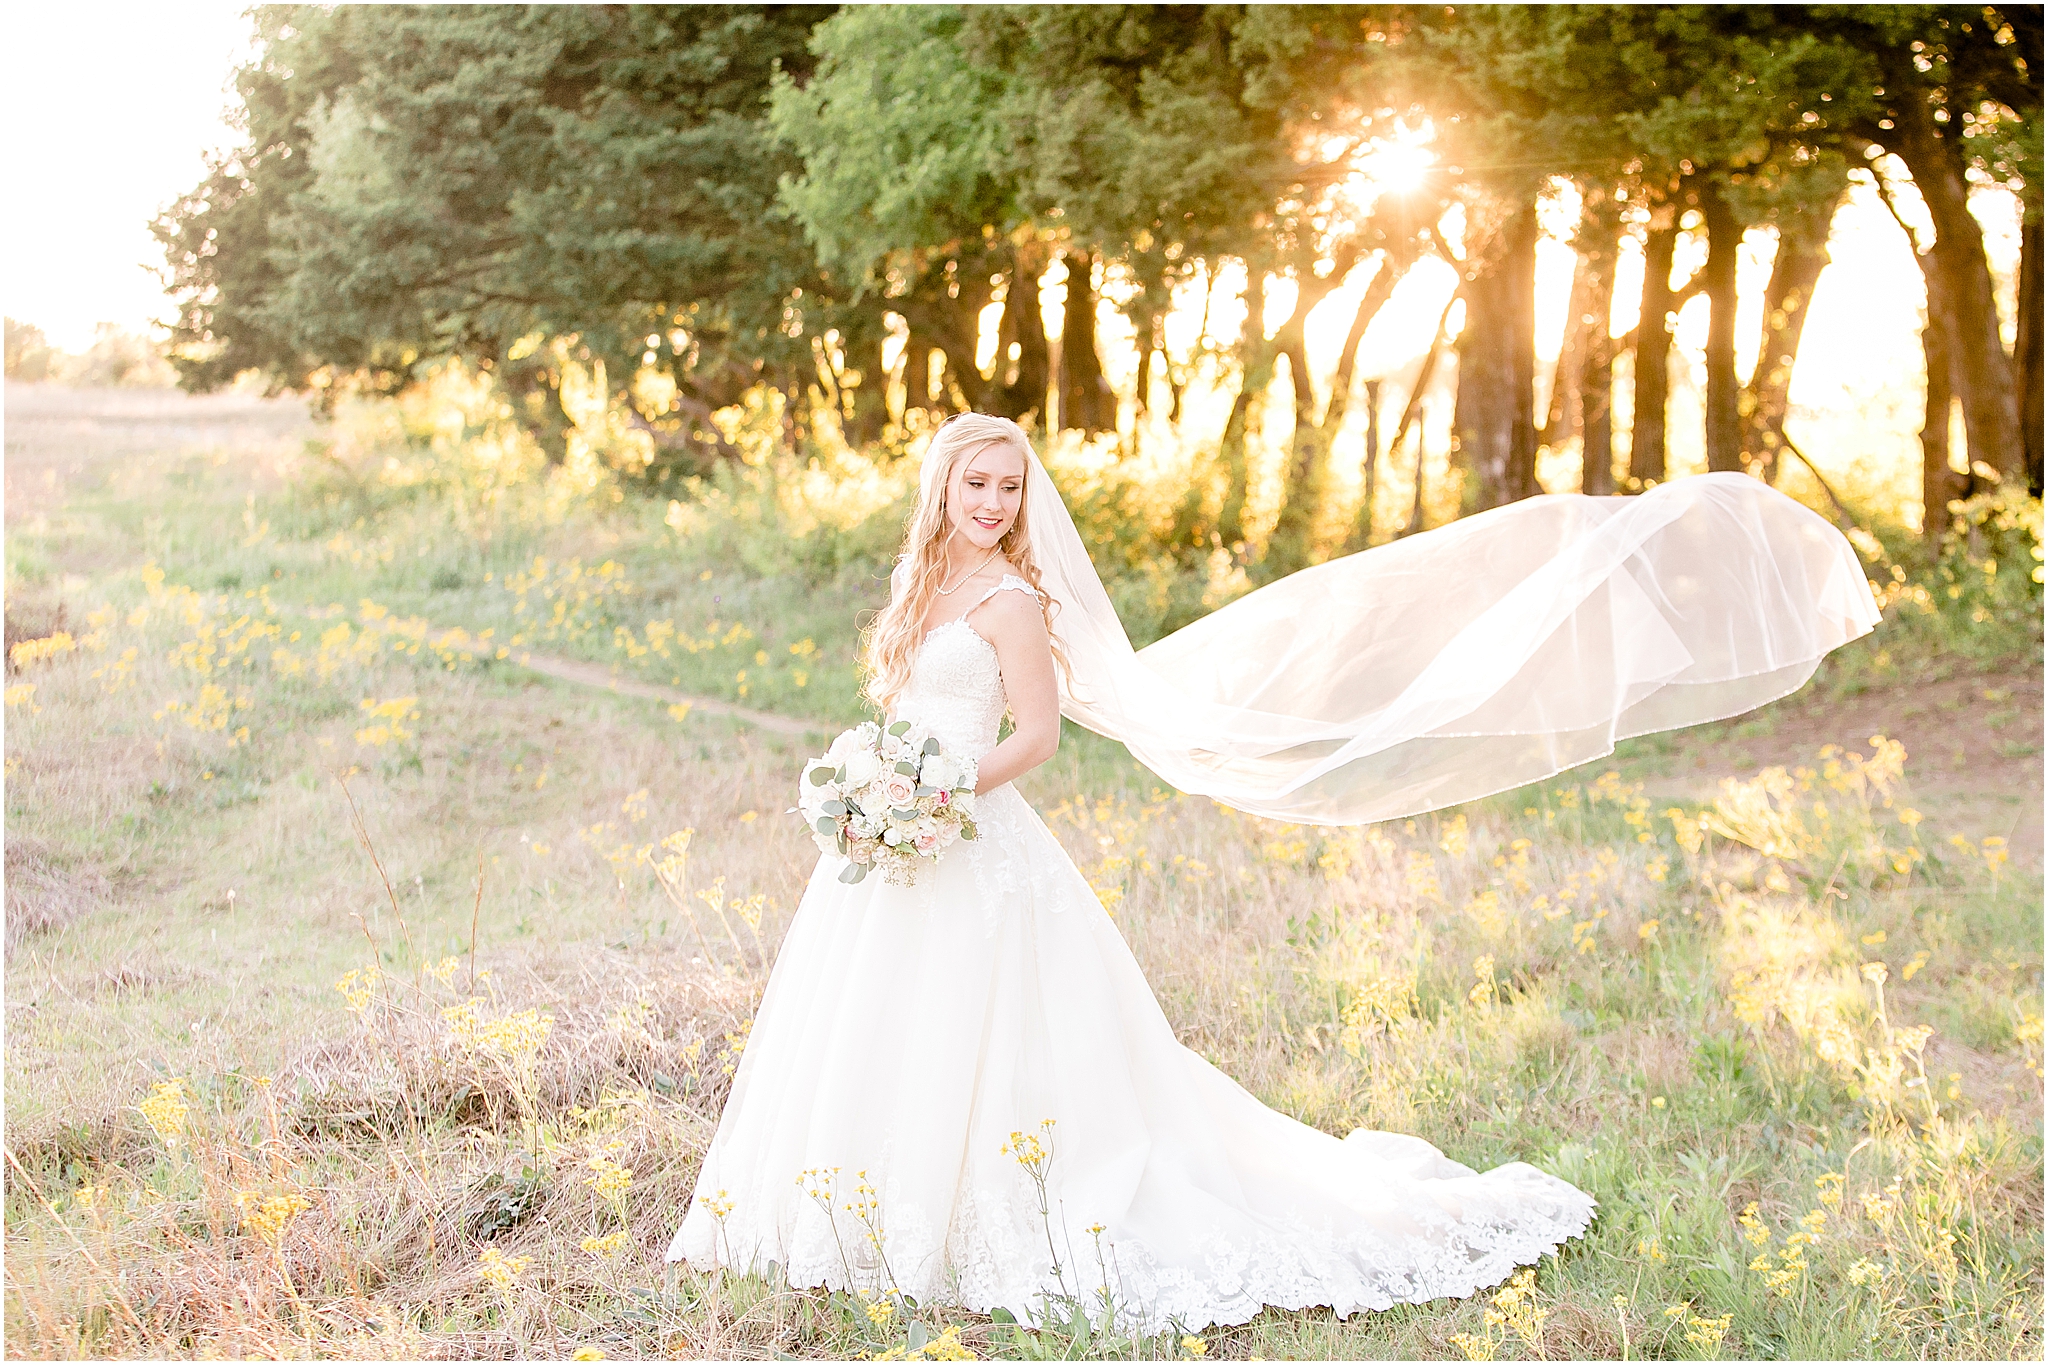 Outdoor bridal session by Dallas Wedding Photographer Jillian Hogan Photography www.jillianhogan.com